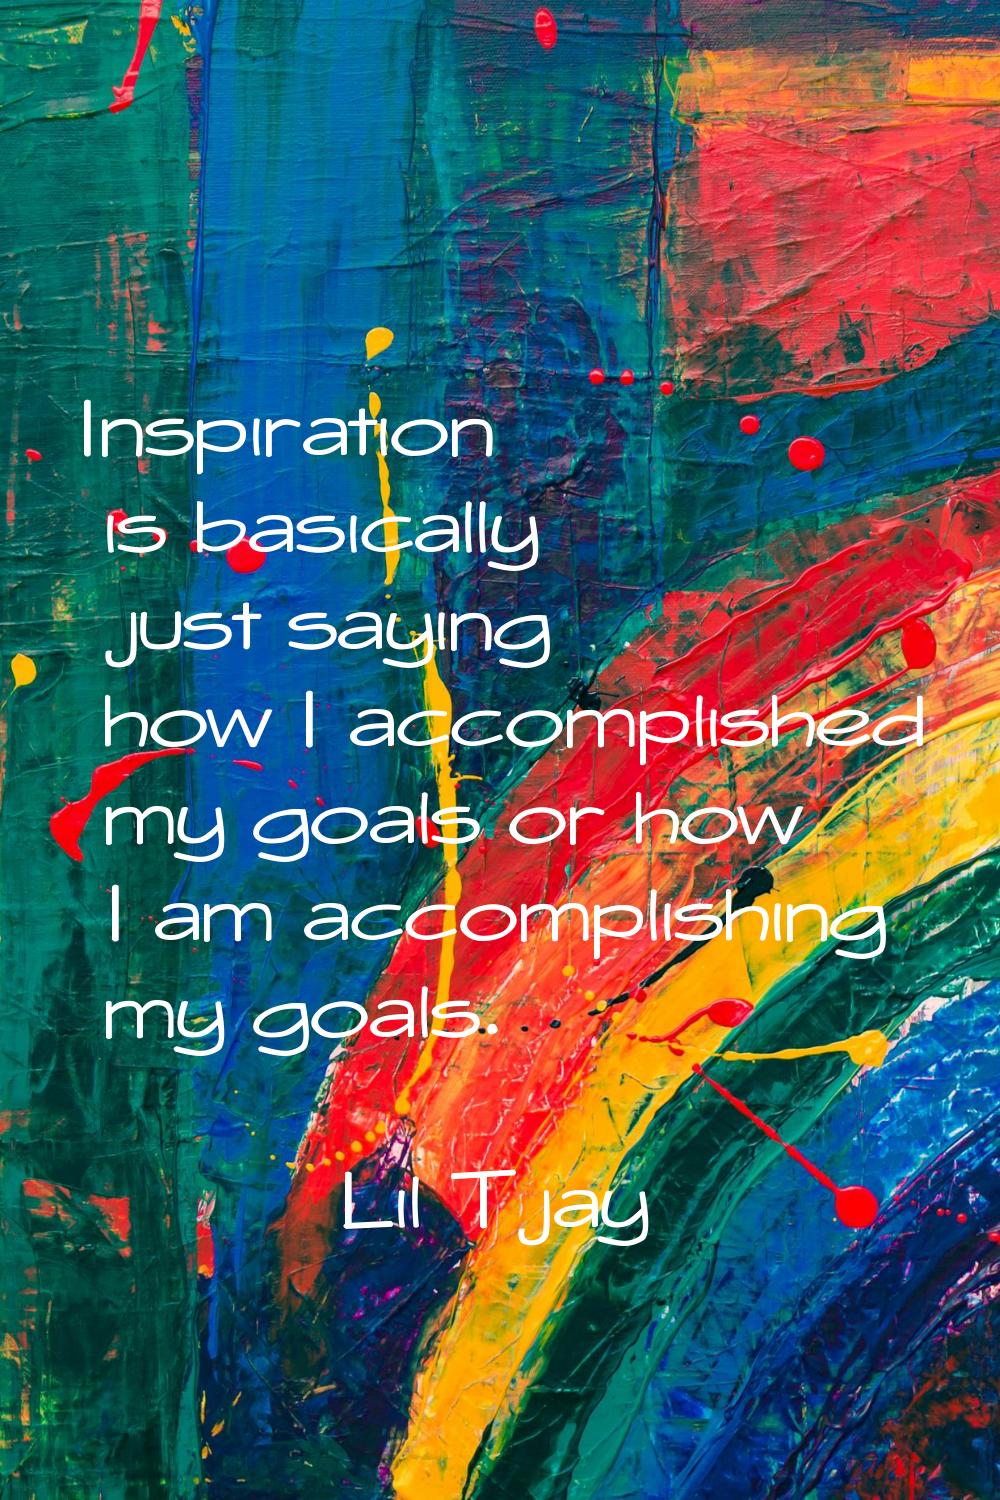 Inspiration is basically just saying how I accomplished my goals or how I am accomplishing my goals